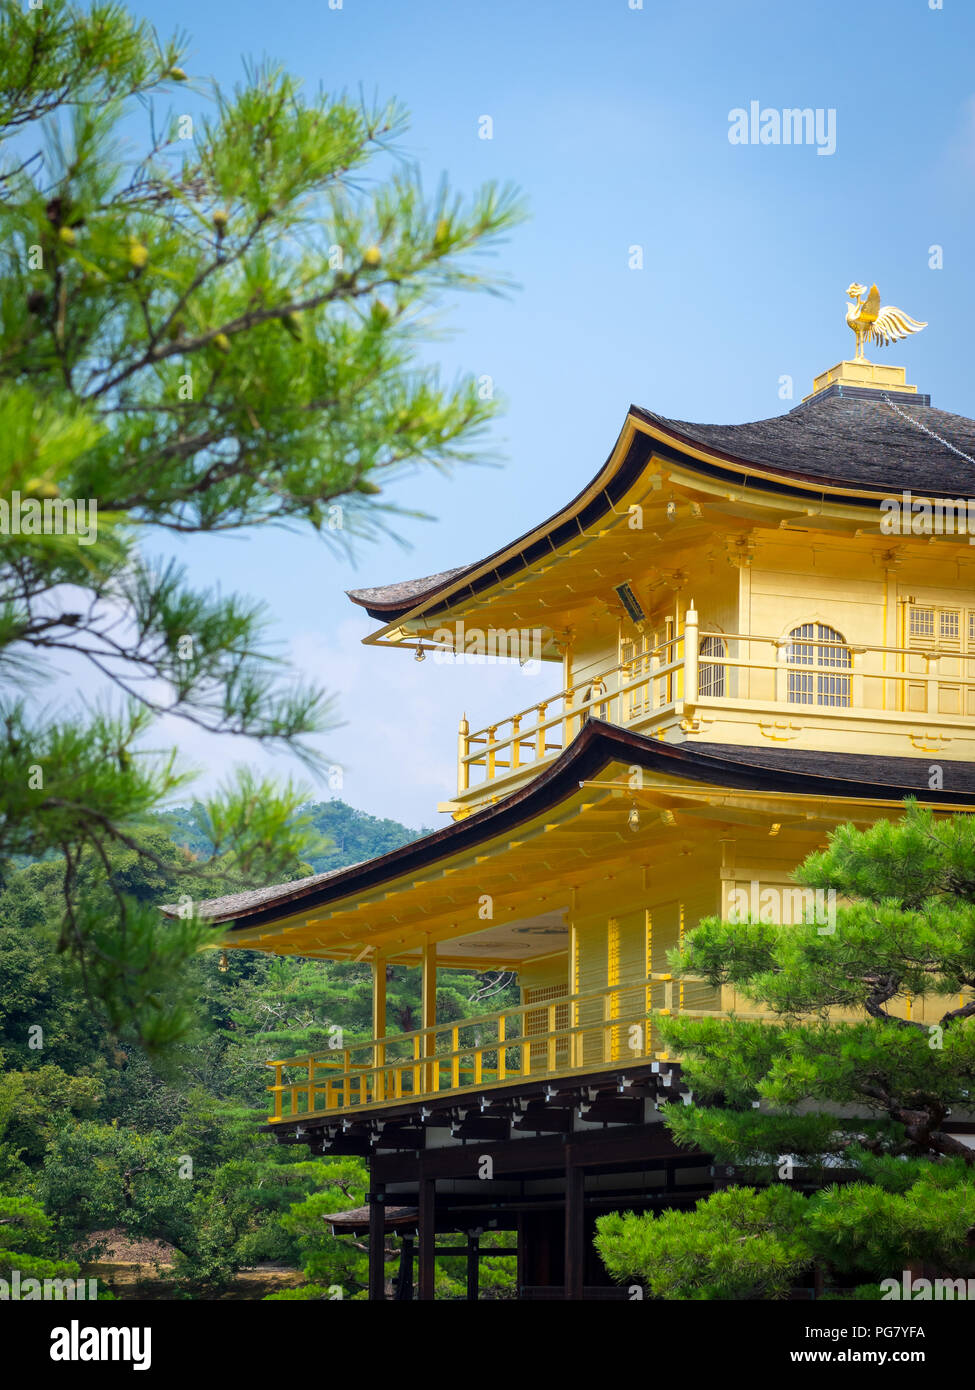 Kinkaku-ji (auch bekannt als Kinkakuji oder Rokuon-ji), der Tempel des Goldenen Pavillons, ist ein spektakulärer Zen-buddhistischer Tempel in Kyoto, Japan. Stockfoto